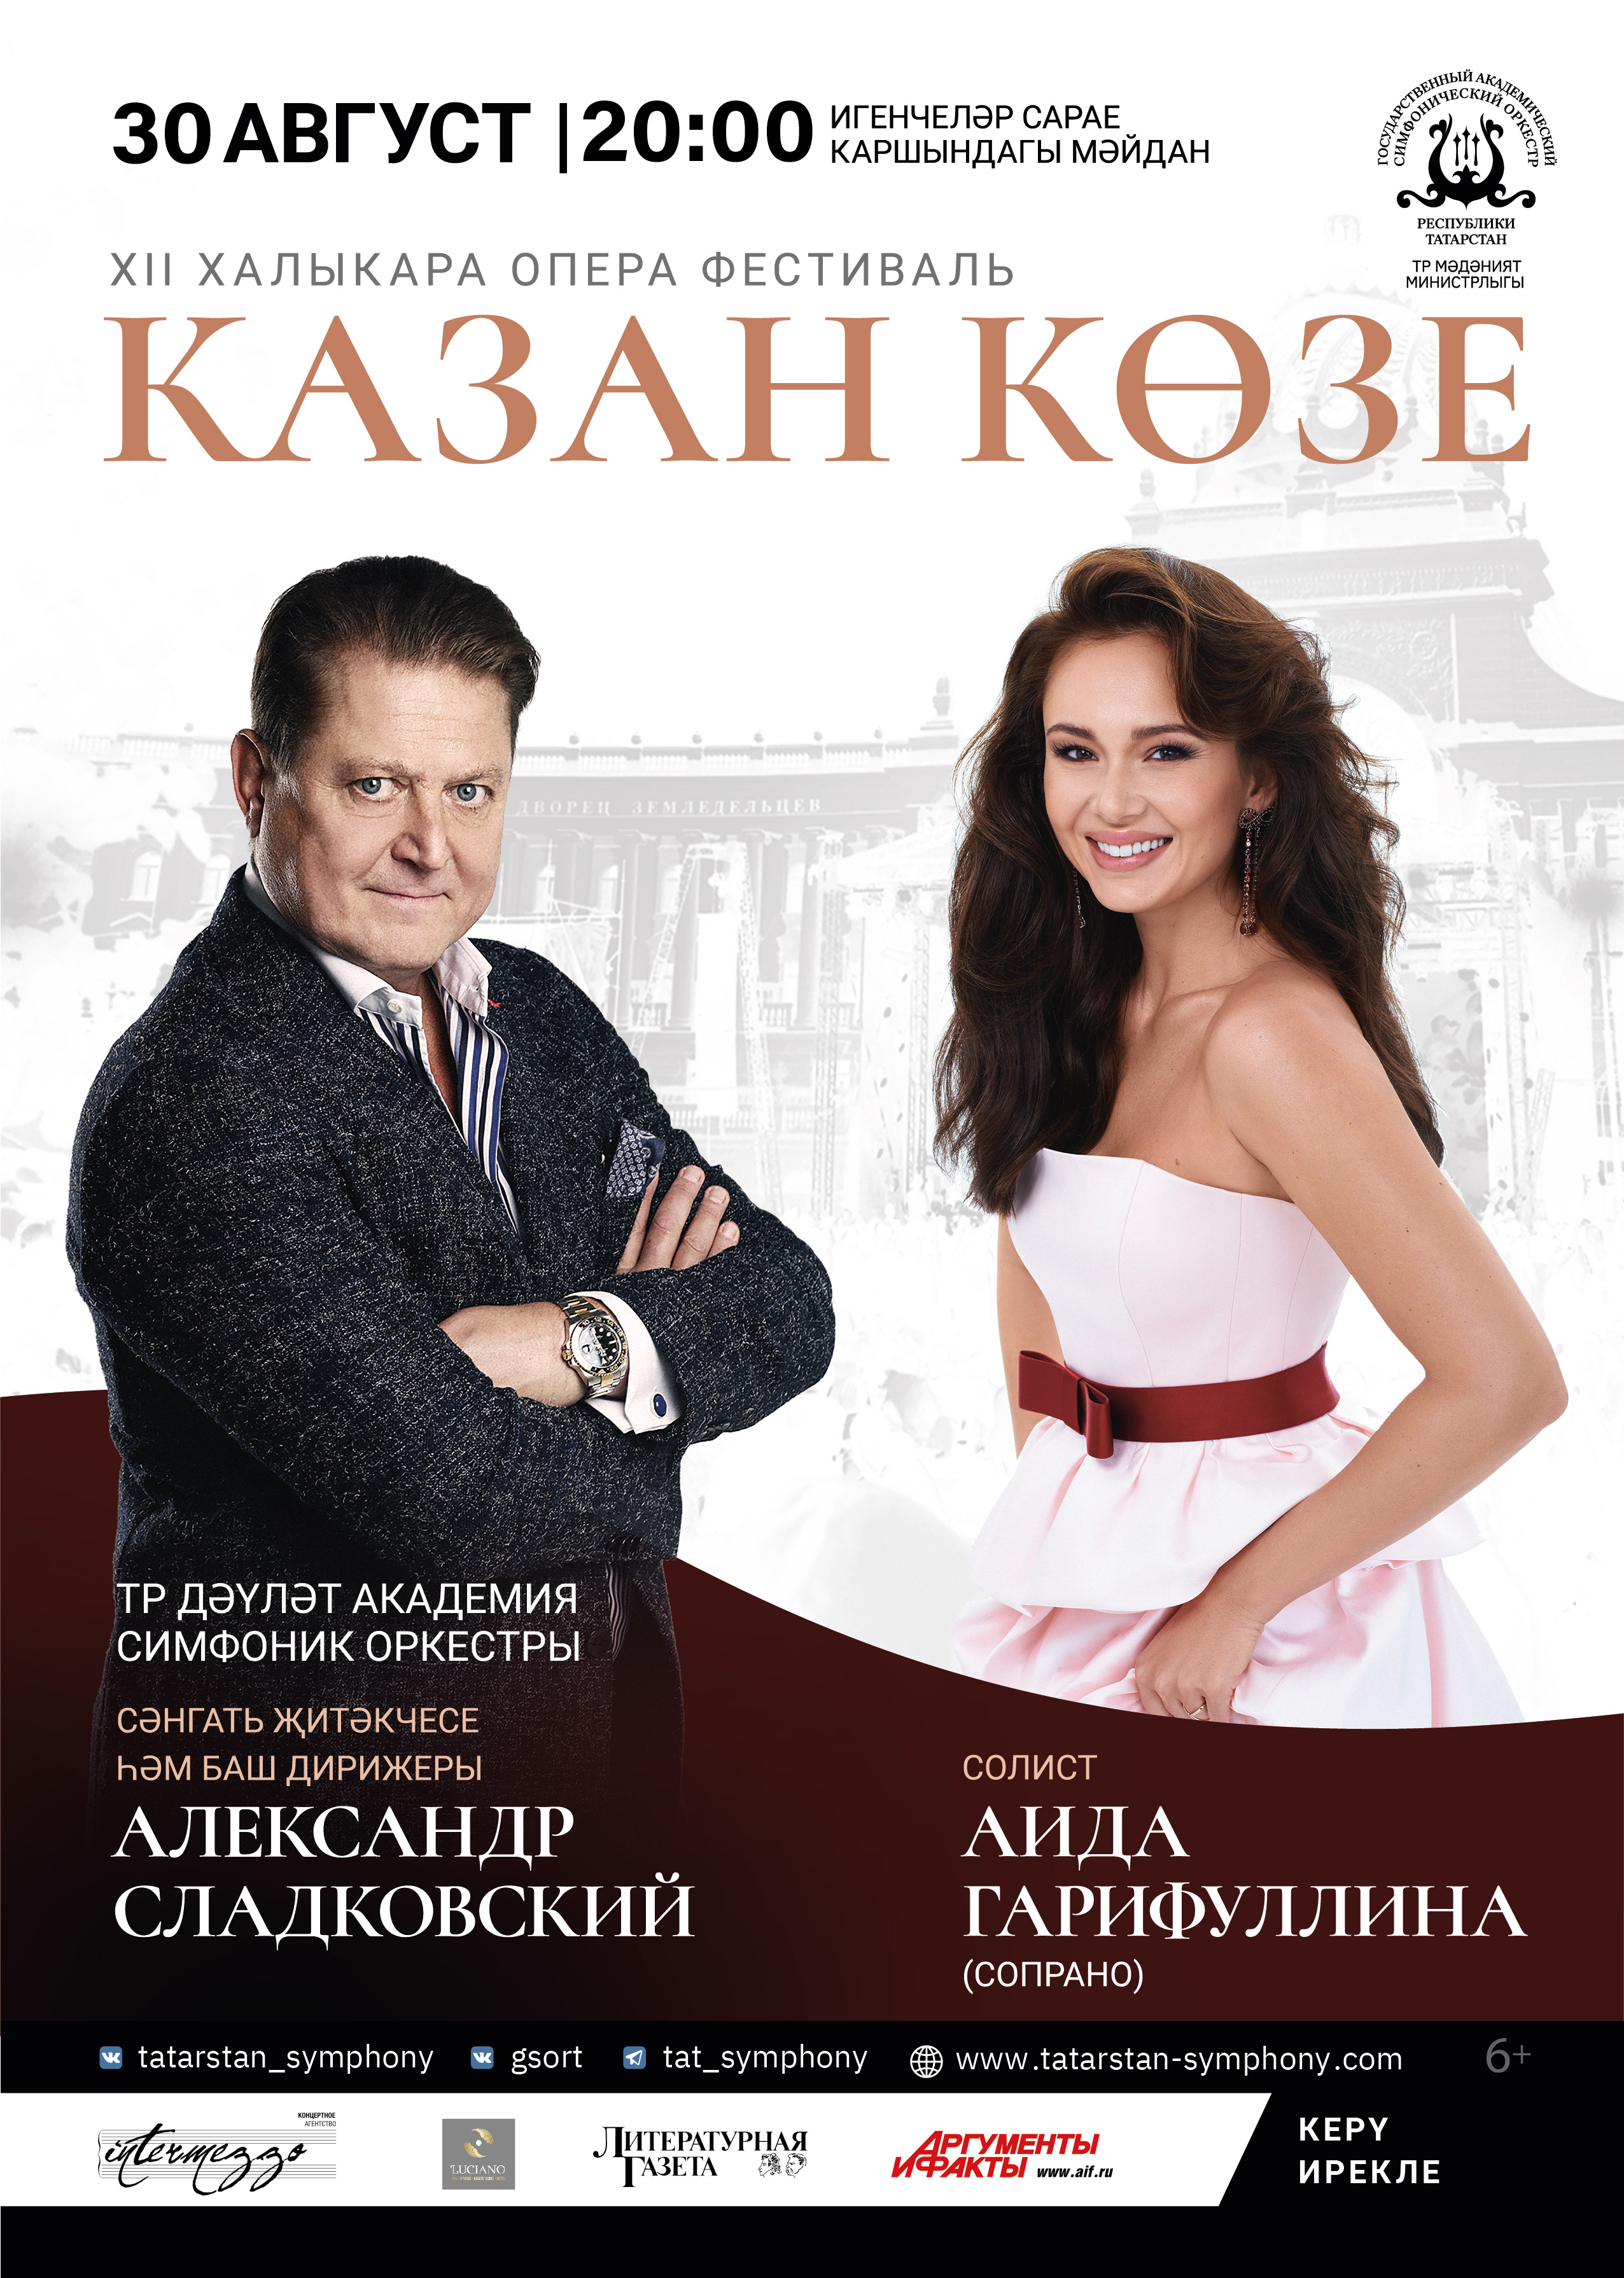 Афиши 57-го концертного сезона на татарском языке